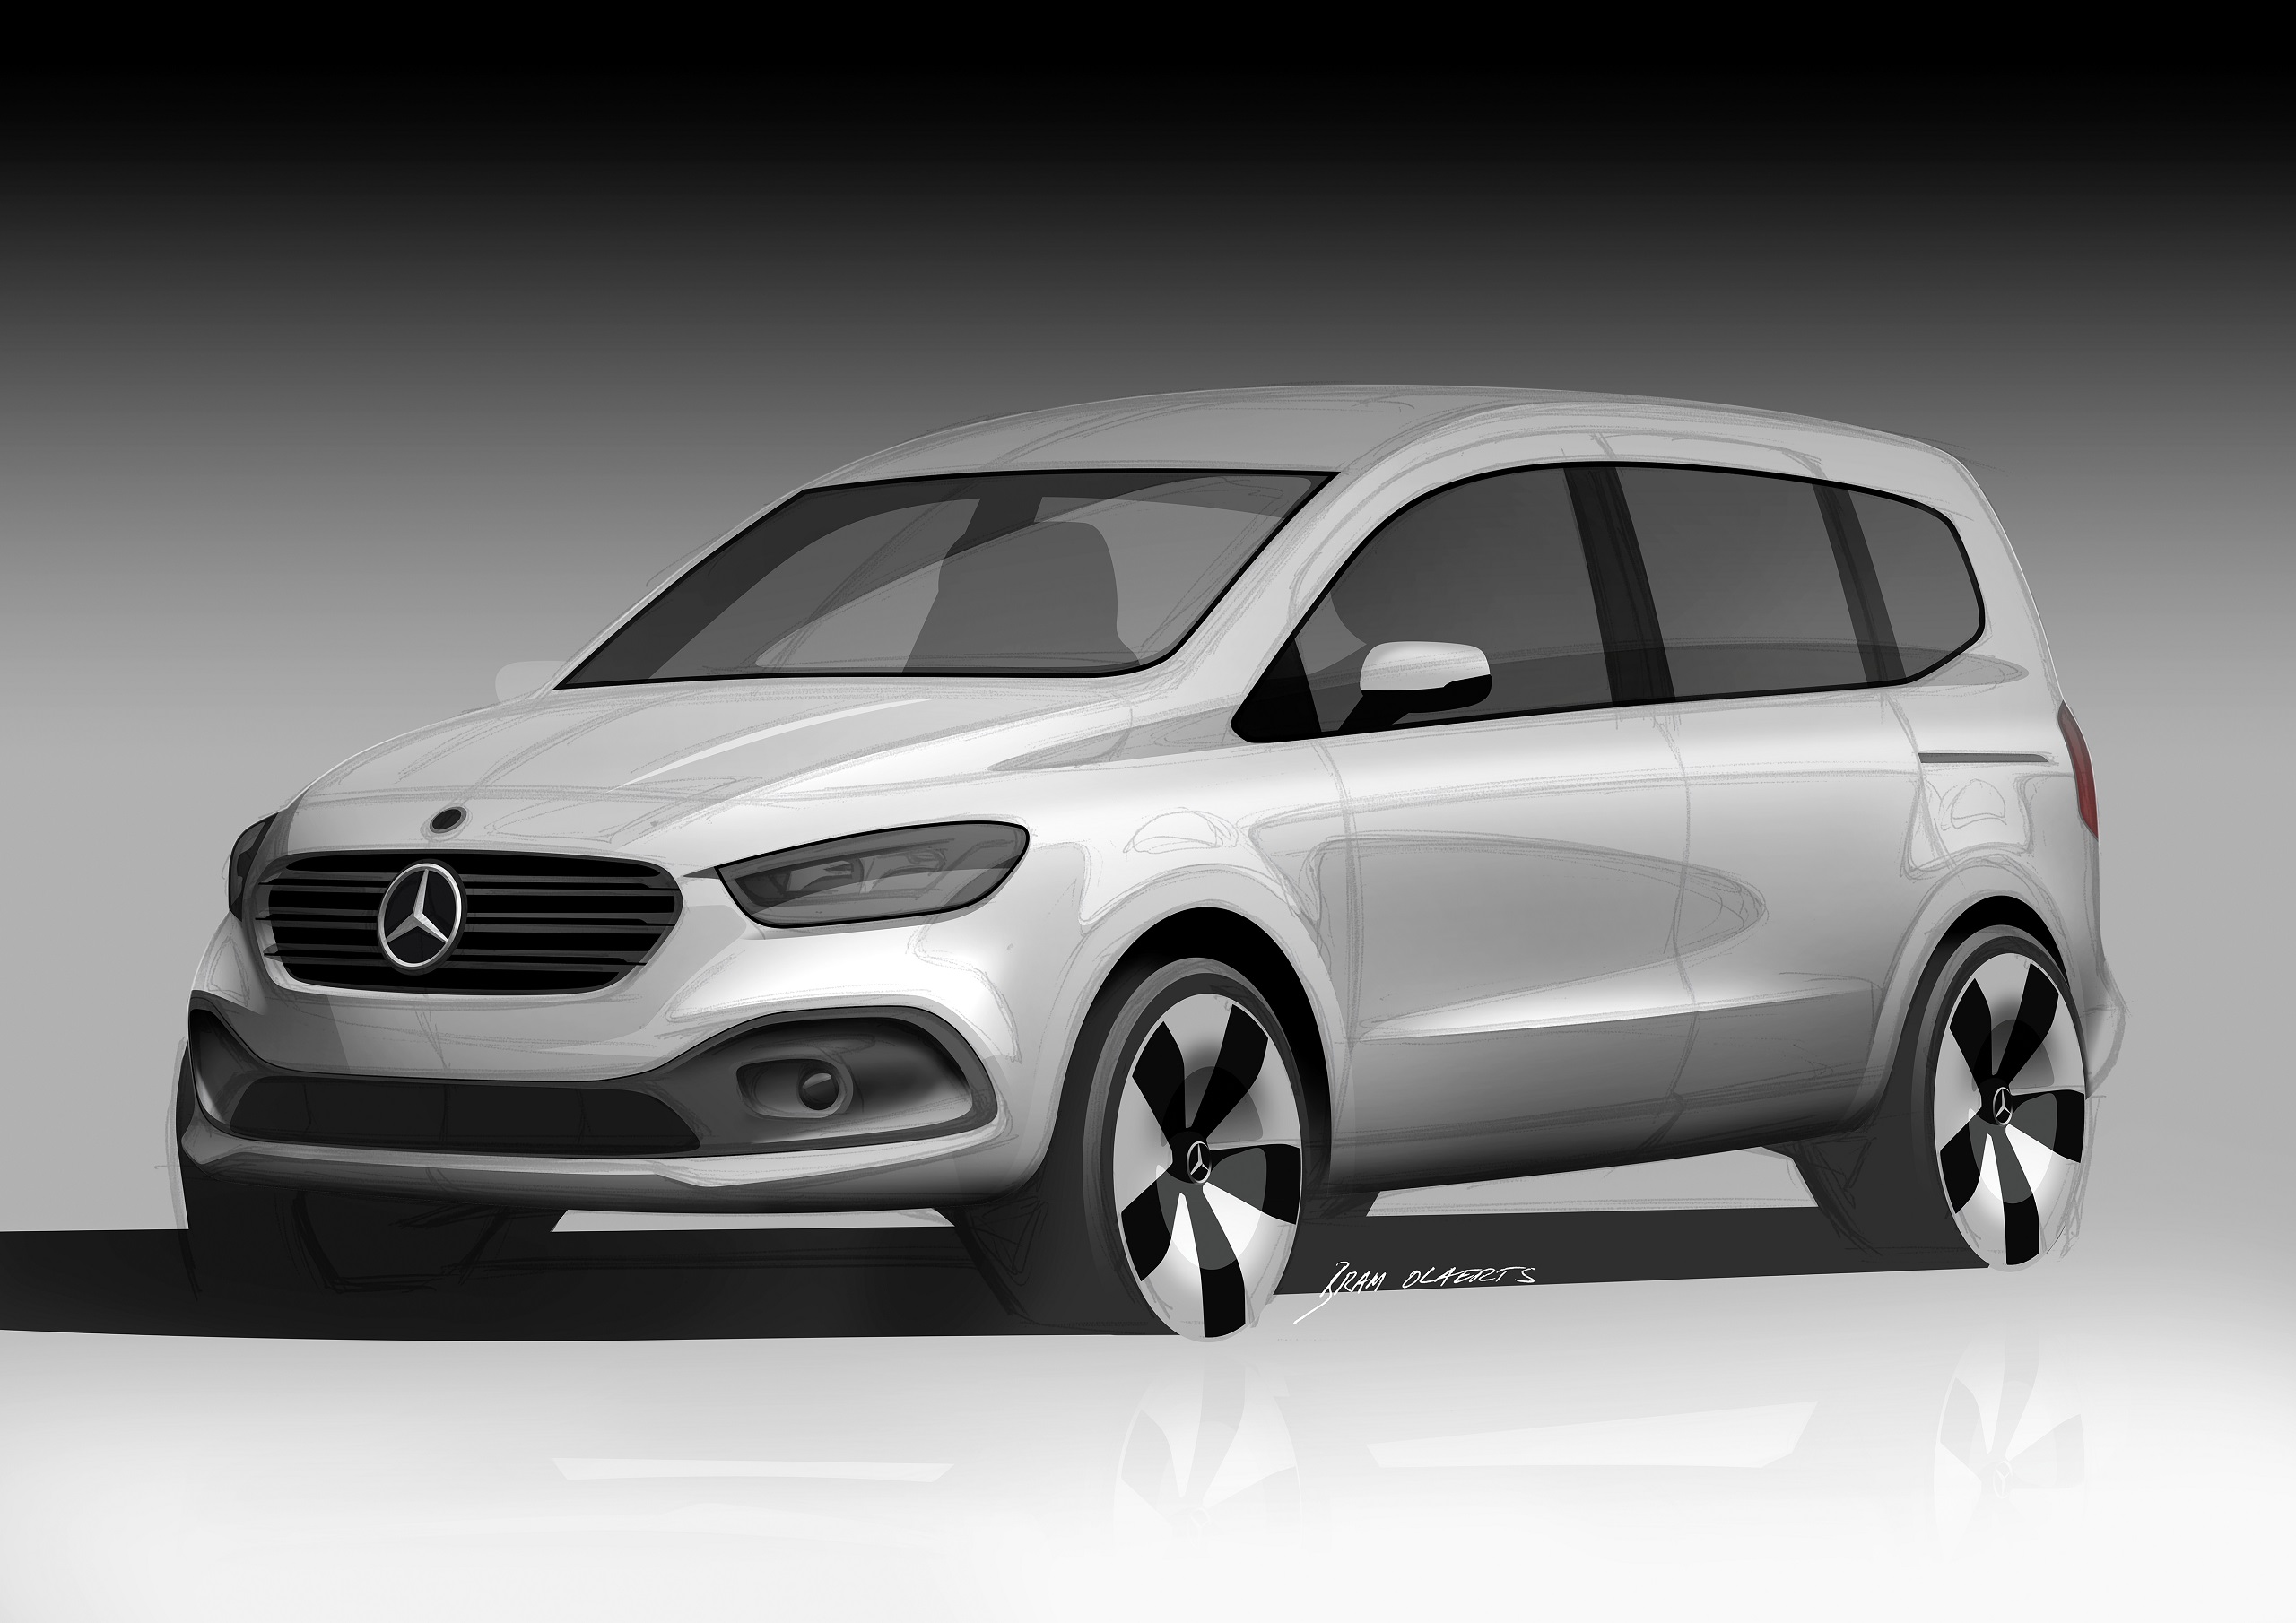 2022 Mercedes-Benz Citan Design Sketch Wallpapers #104 of 115